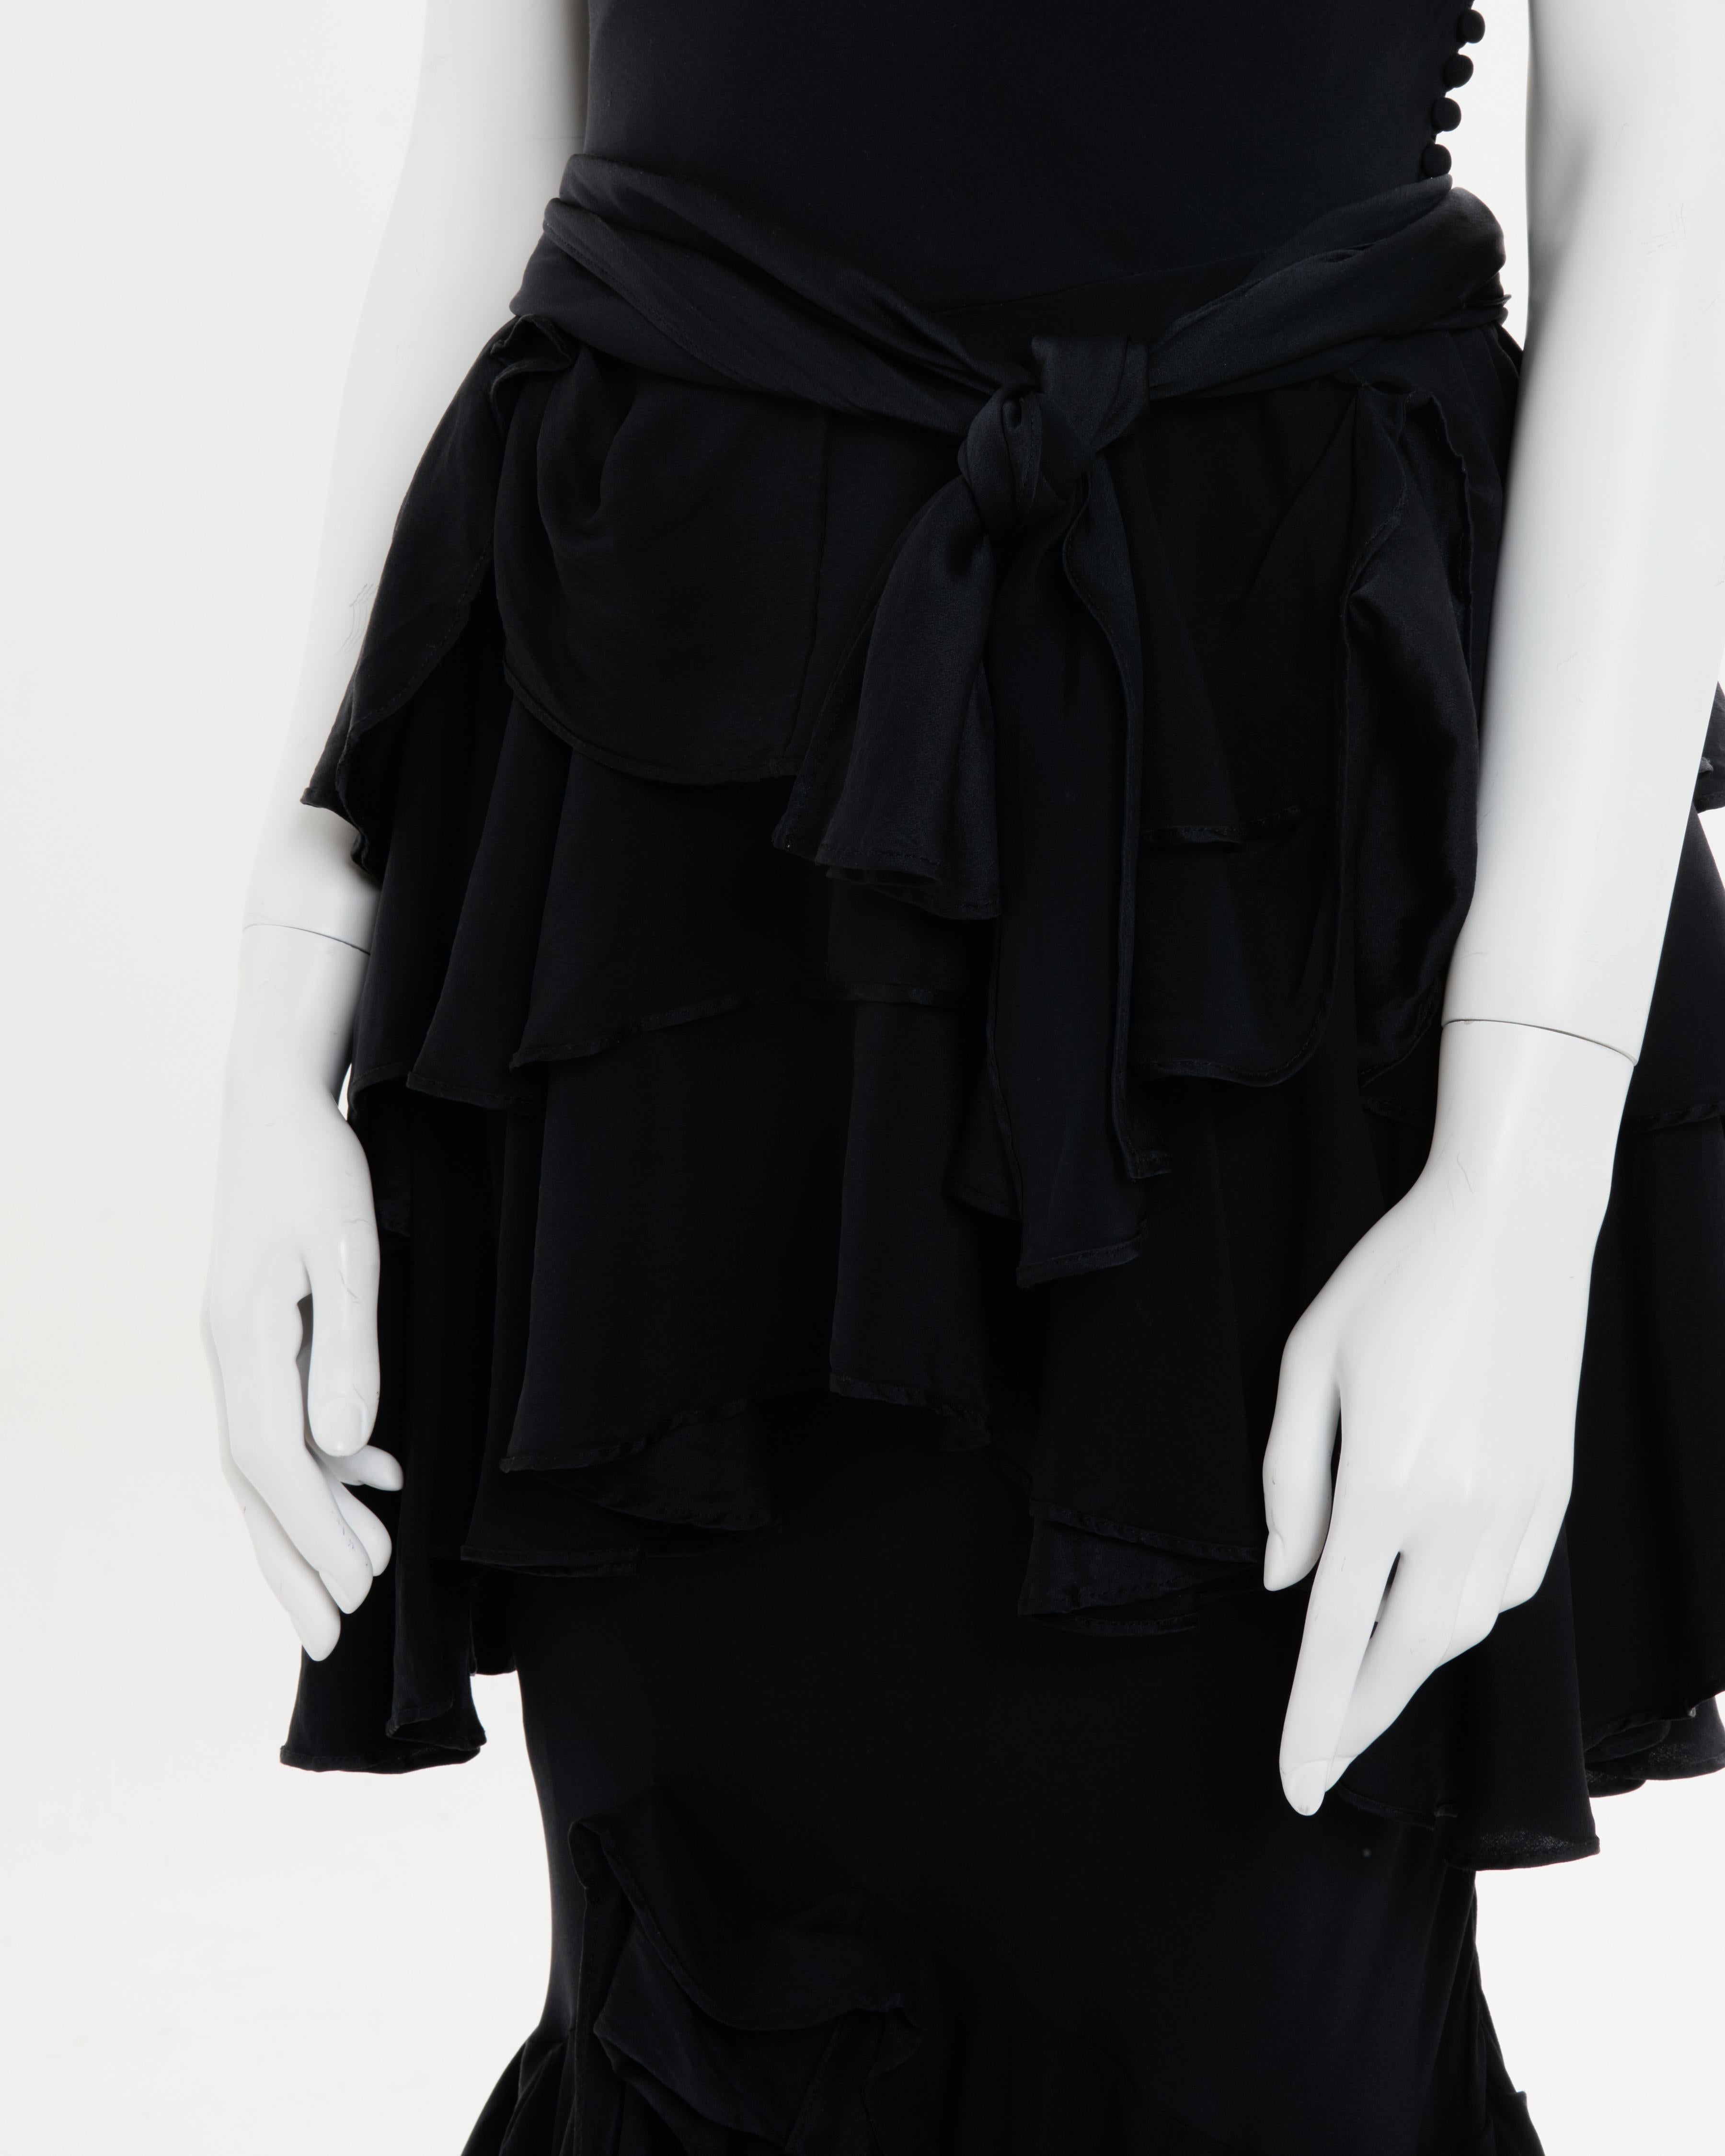 Christian Dior by John Galliano F/W 2006 Black silk bias-cut evening dress 6